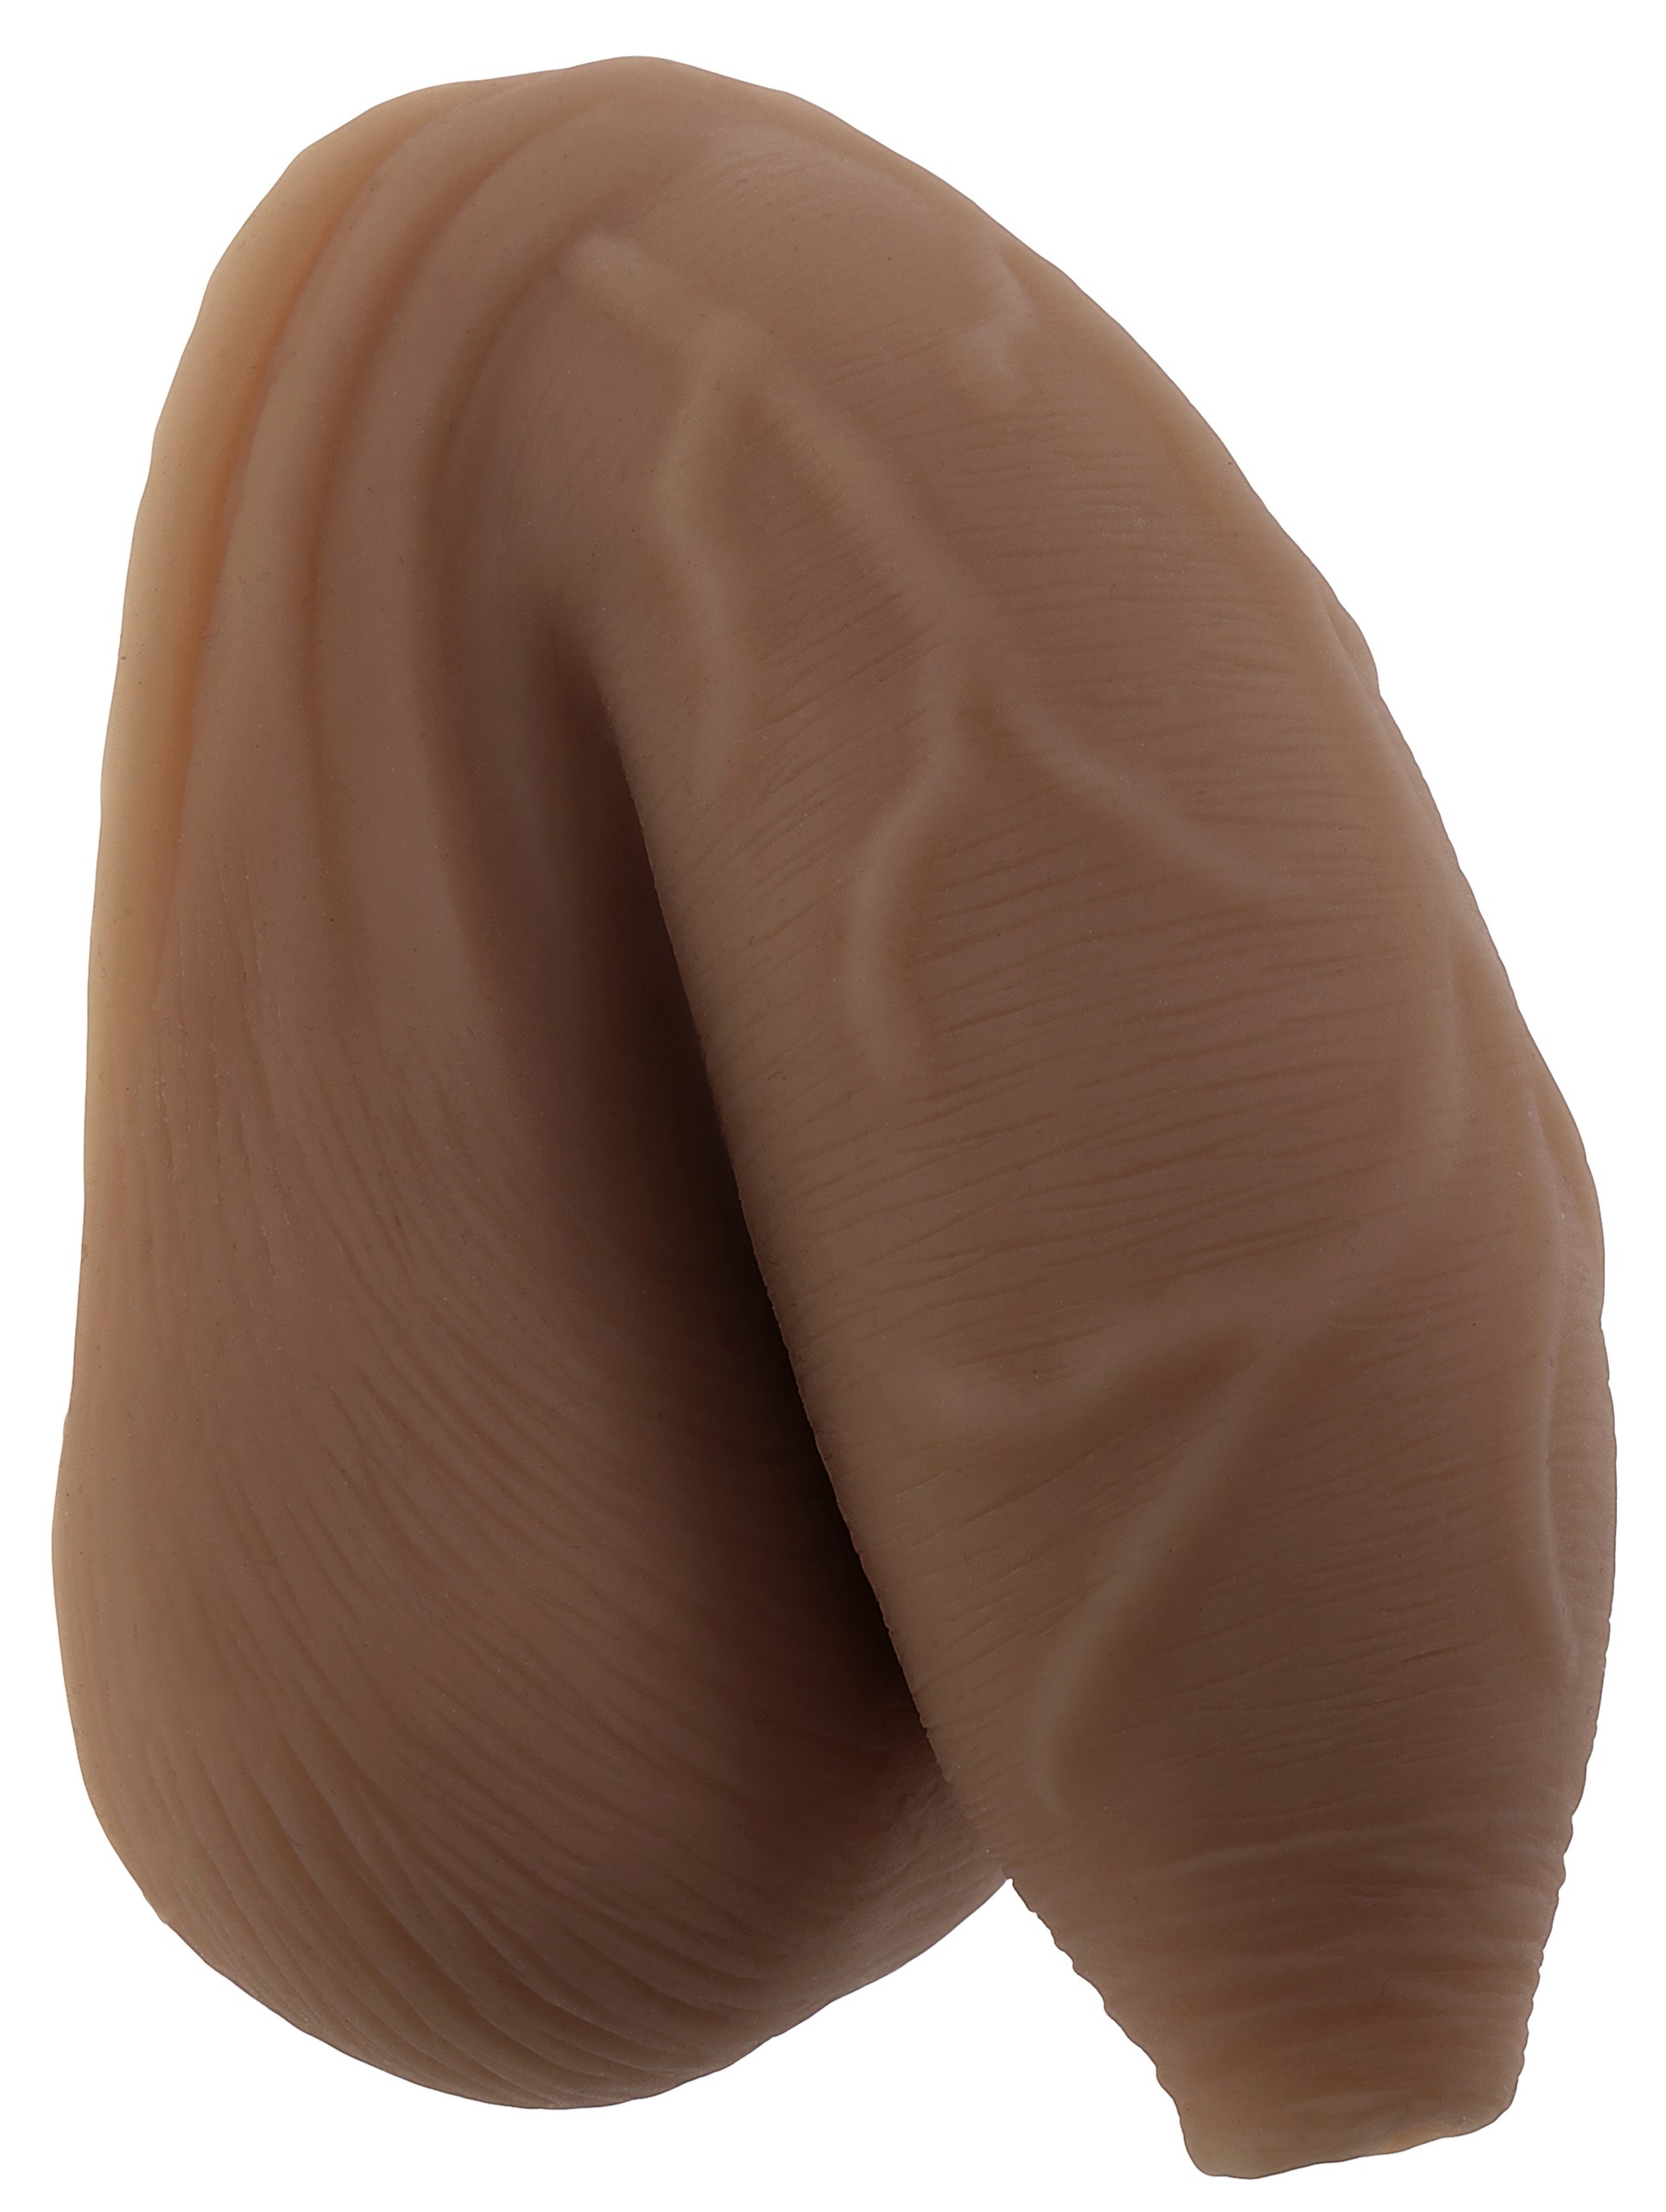 Penis Packer Uncircumcised Gender X, TPE, Maro